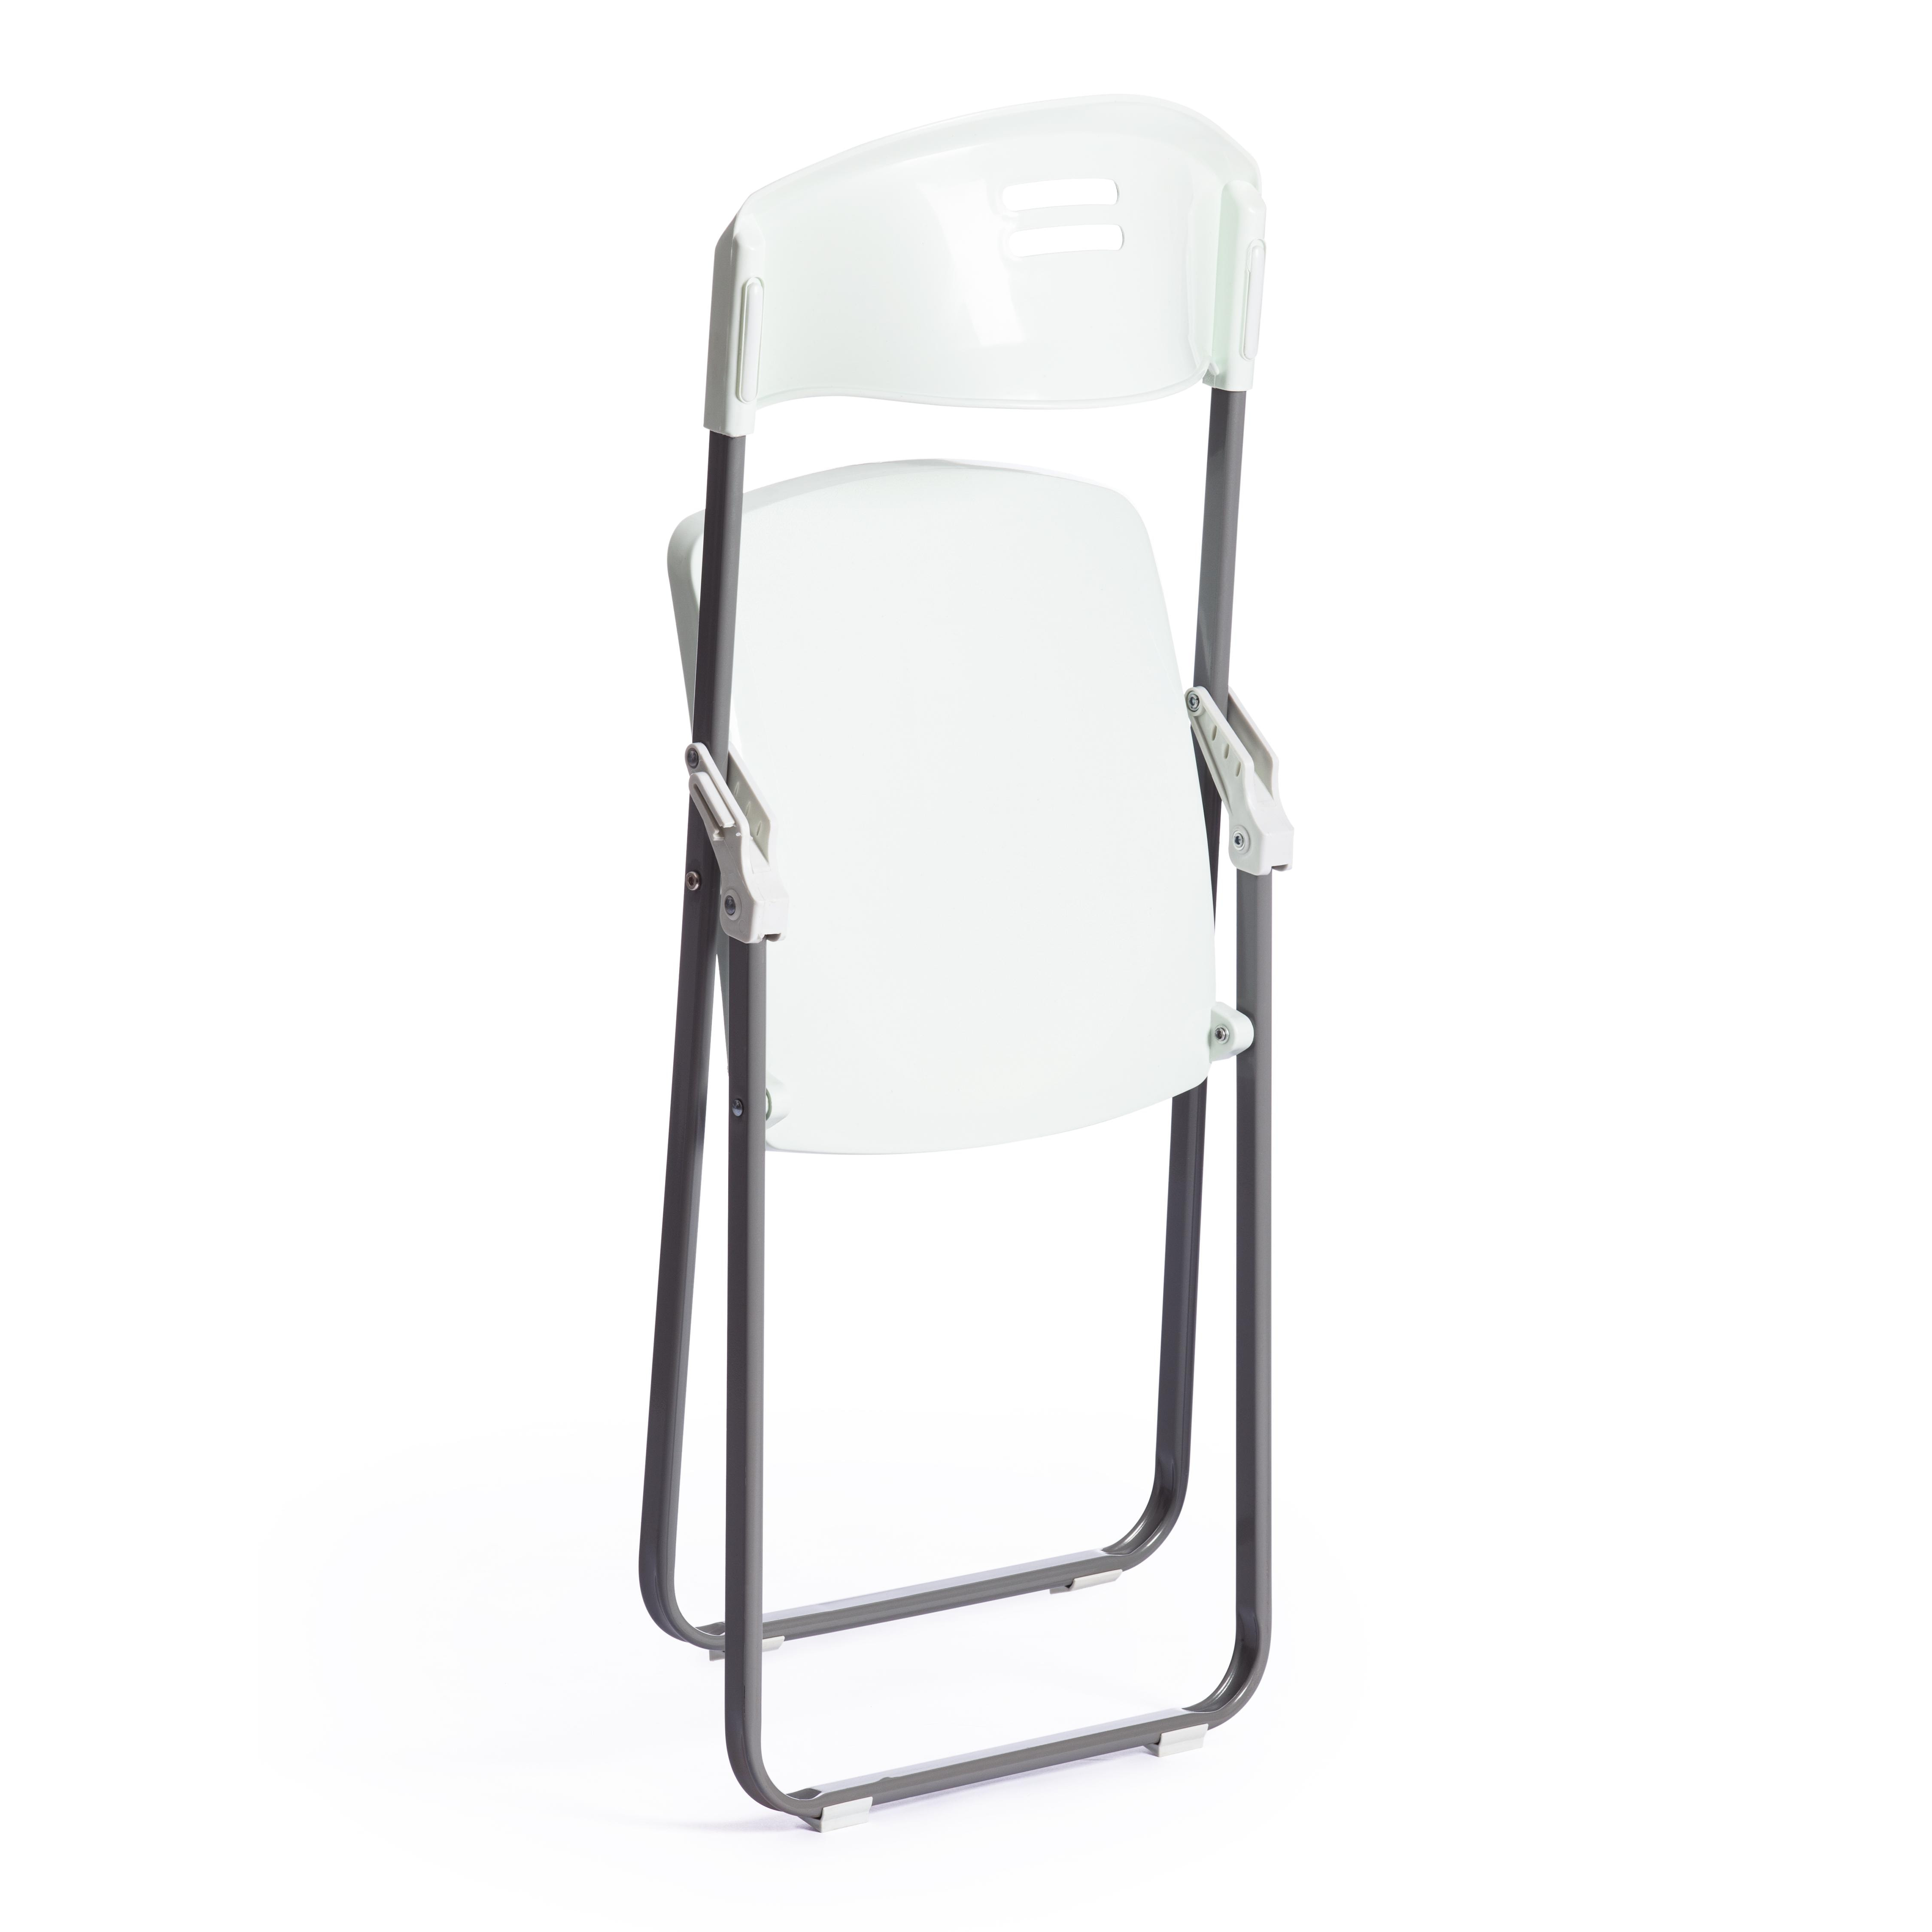 Стул складной FOLDER CHAIR 2 (mod. 222) каркас: металл, сиденье/спинка: пластик, 47 х 46 х 81 см, white (белый)